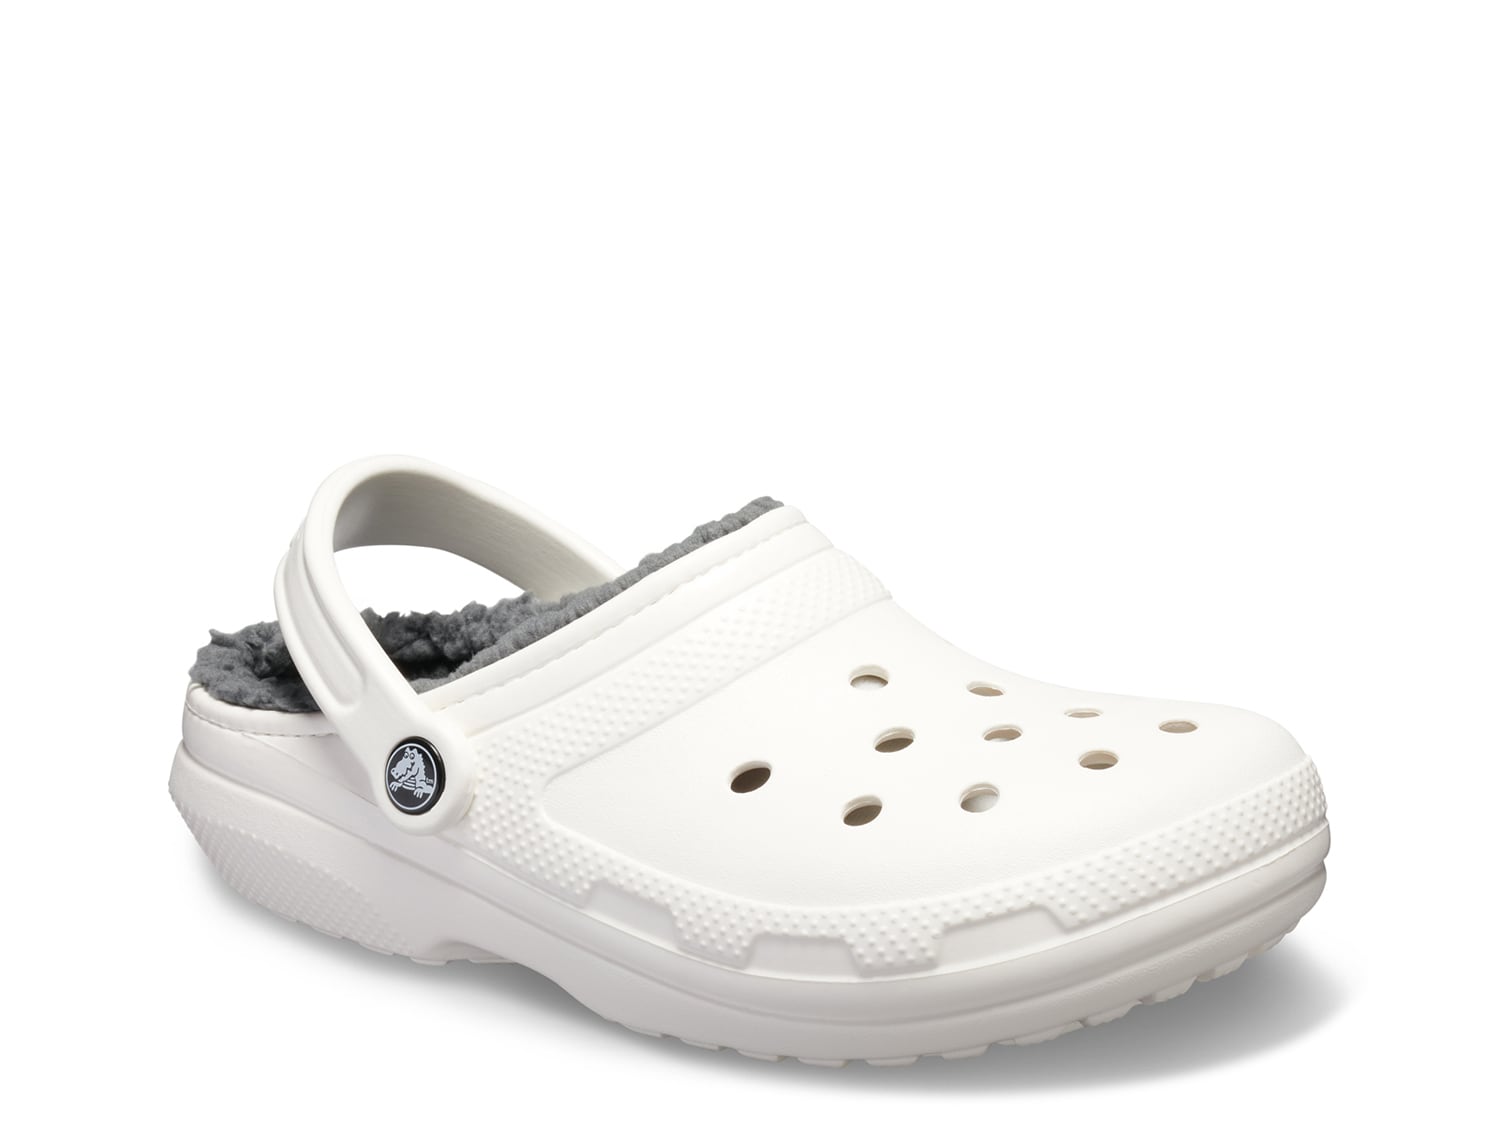 white crocs womens size 6